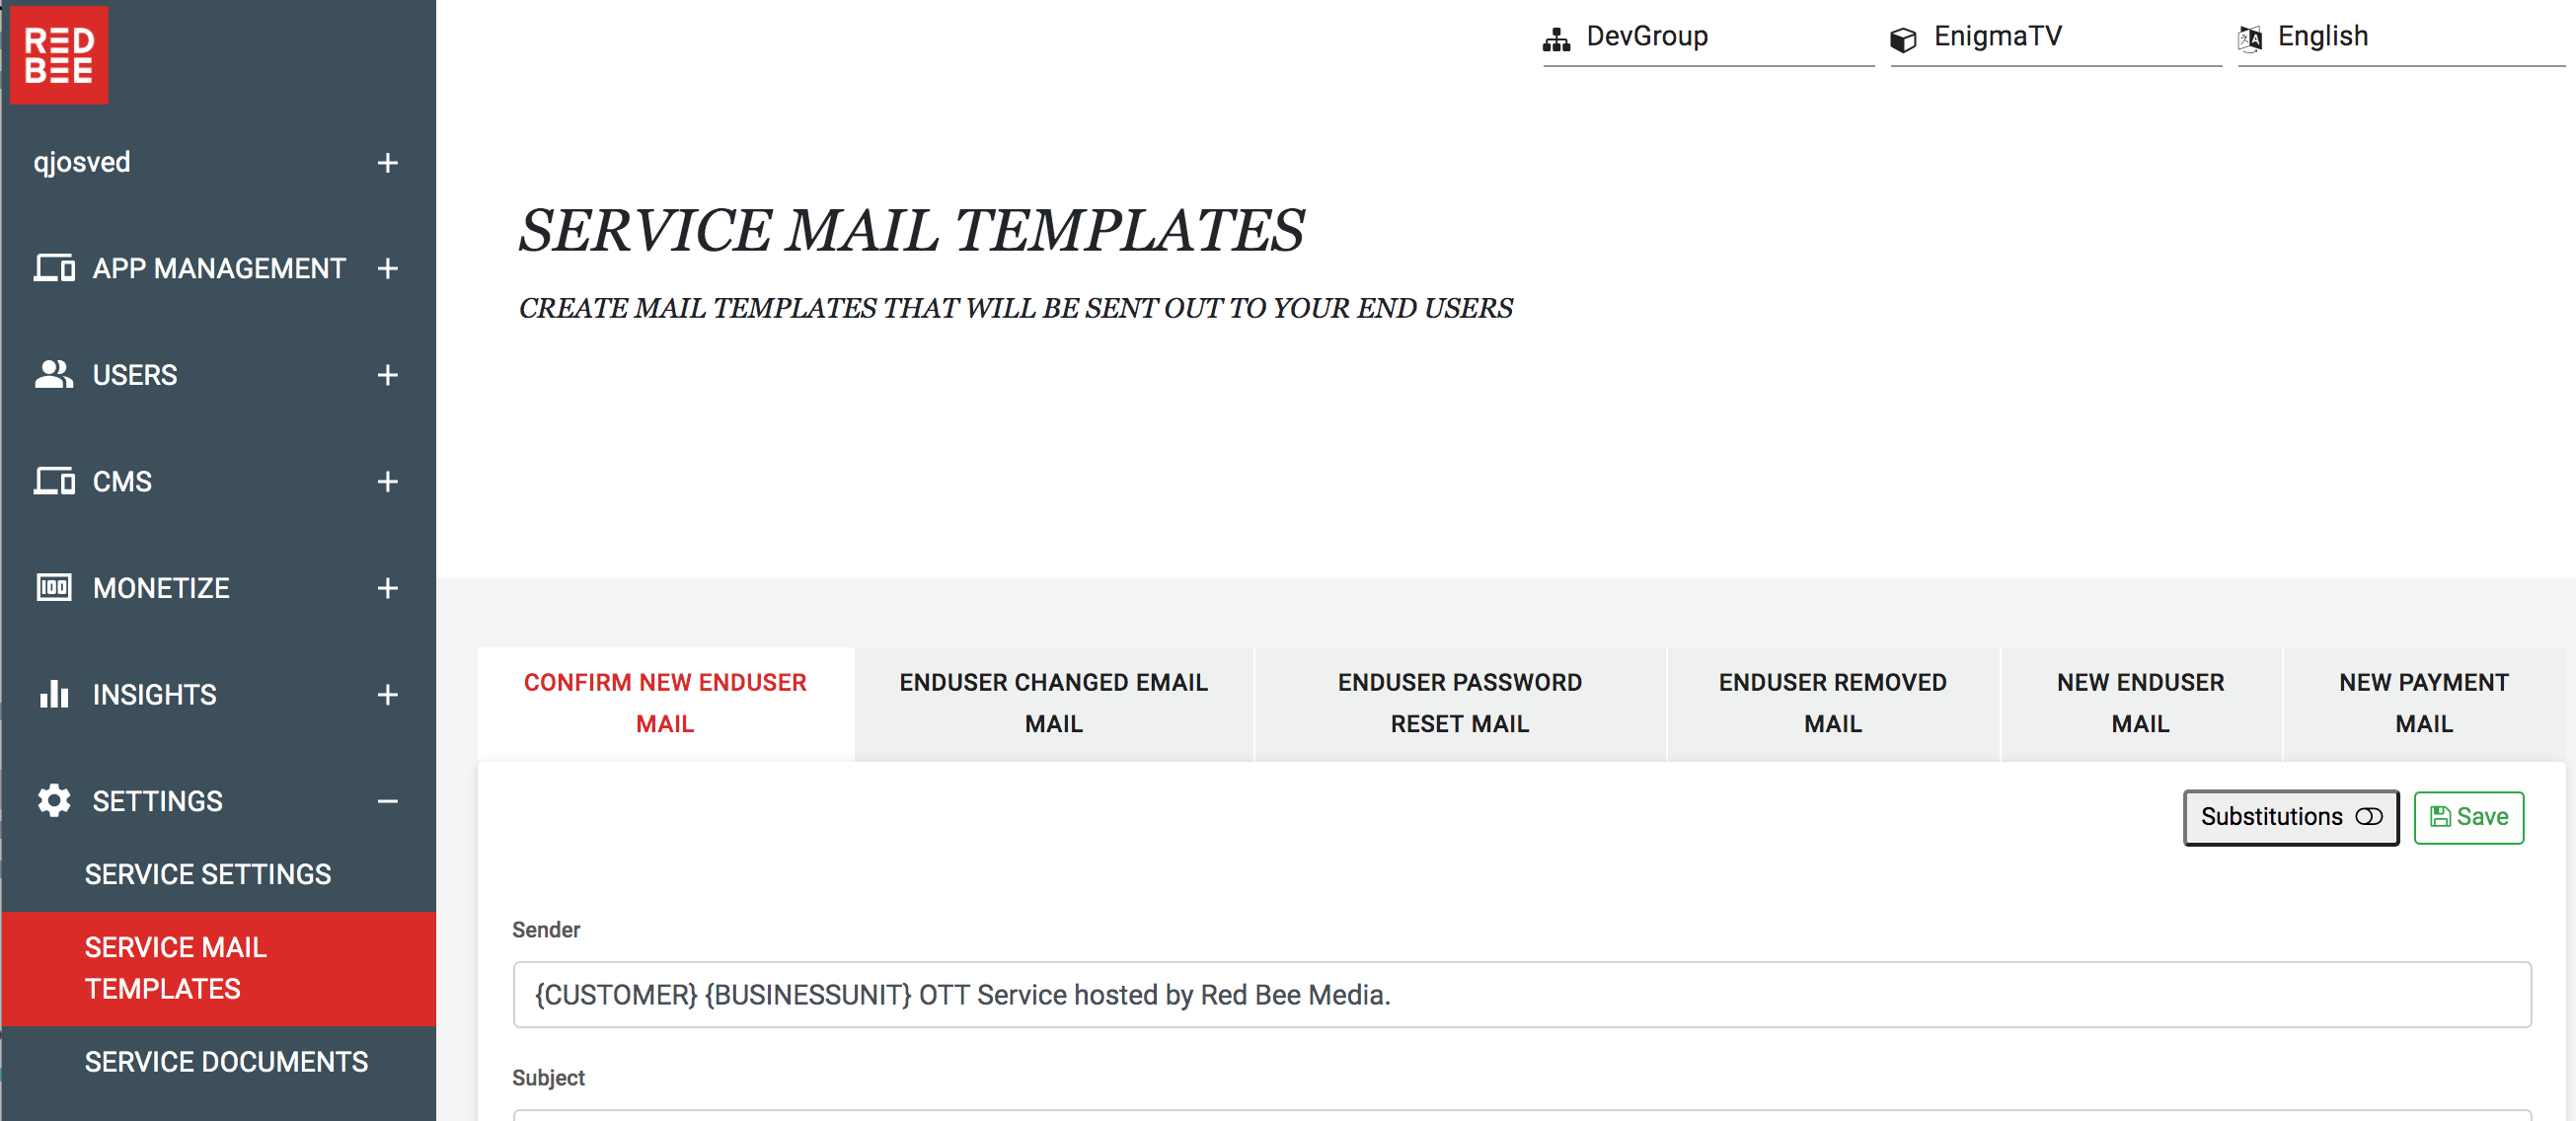 Customer Portal Mail Templates